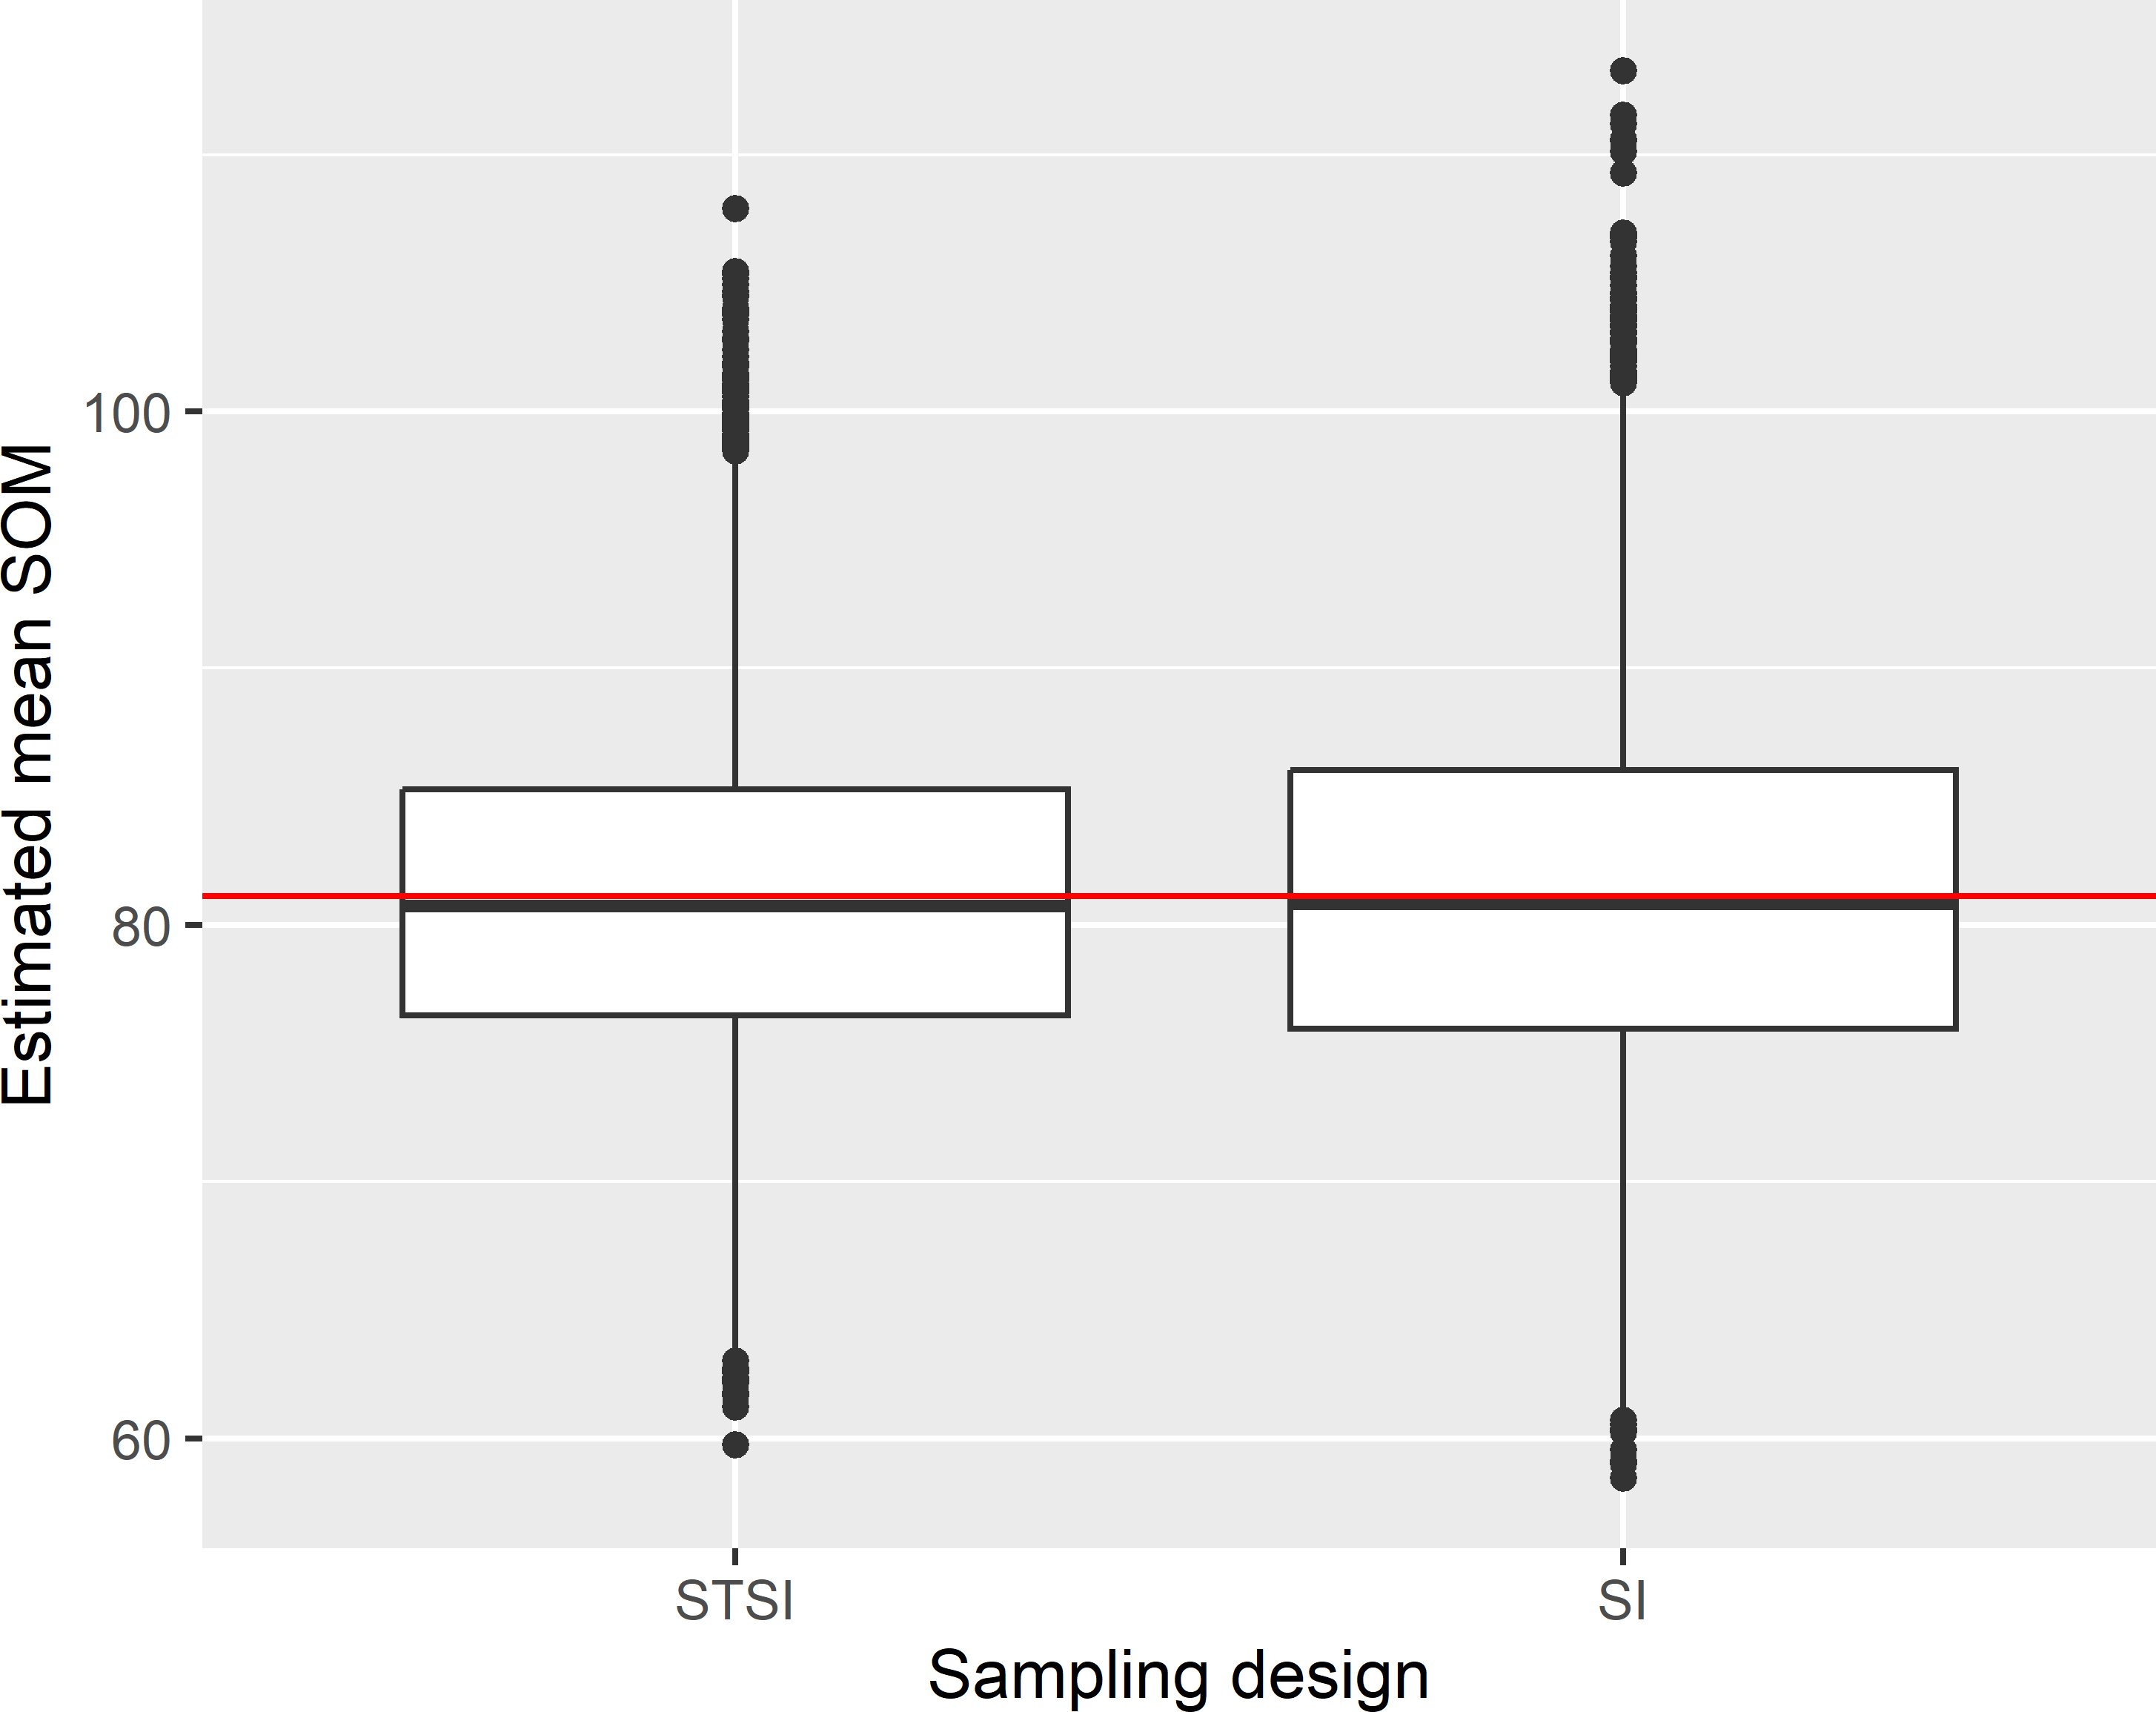 Approximated sampling distribution of the \(\pi\) estimator of the mean SOM concentration (g kg-1) in Voorst for stratified simple random sampling (STSI) and simple random sampling (SI) of size 40.